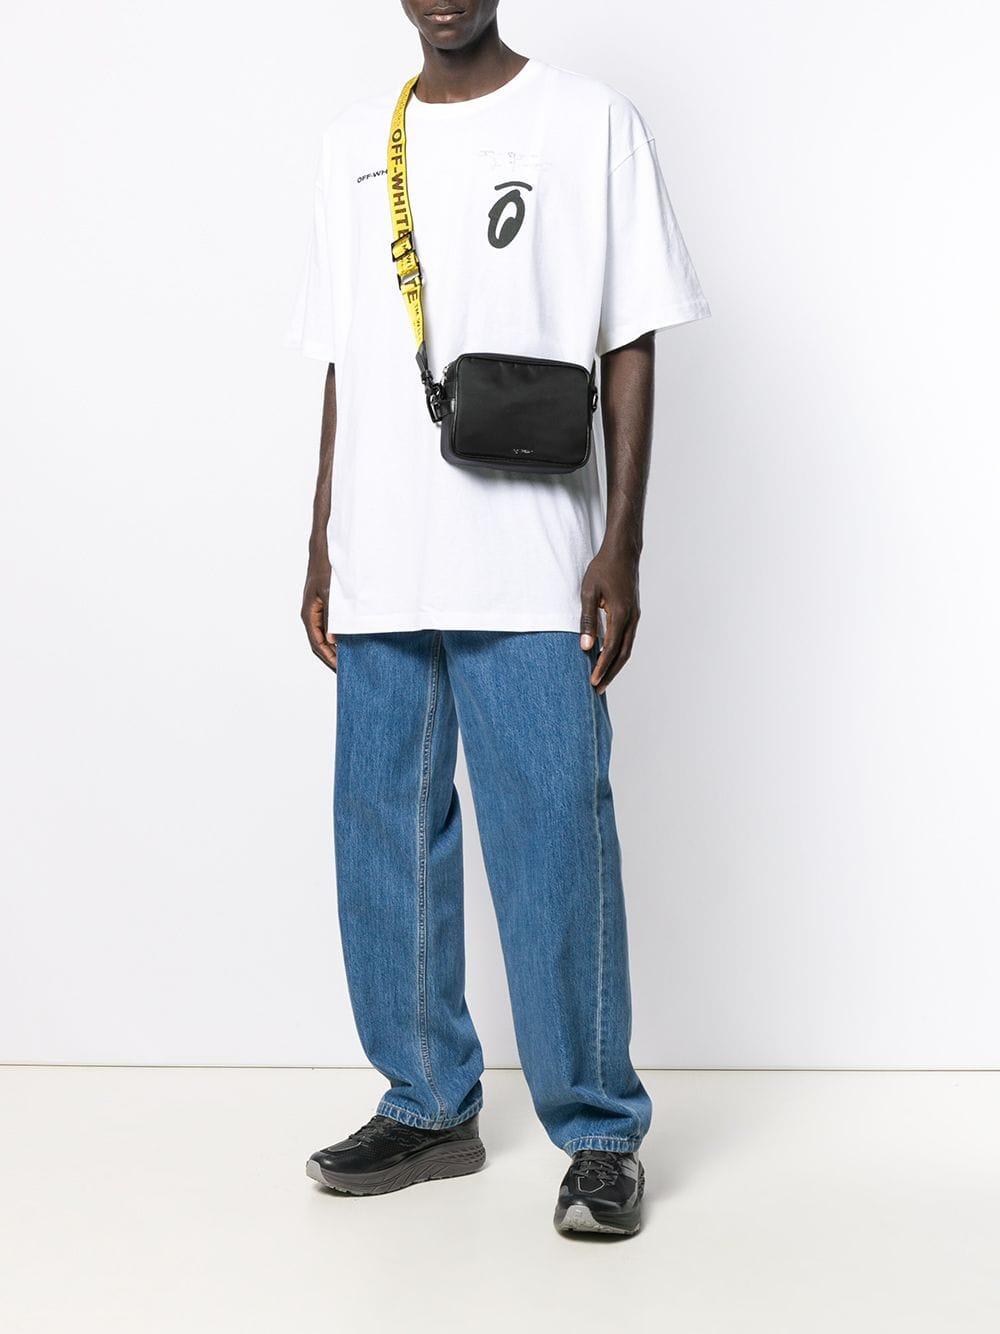 Off-White c/o Virgil Abloh Industrial Bag Strap - Black Bag Accessories,  Accessories - WOWVA20163